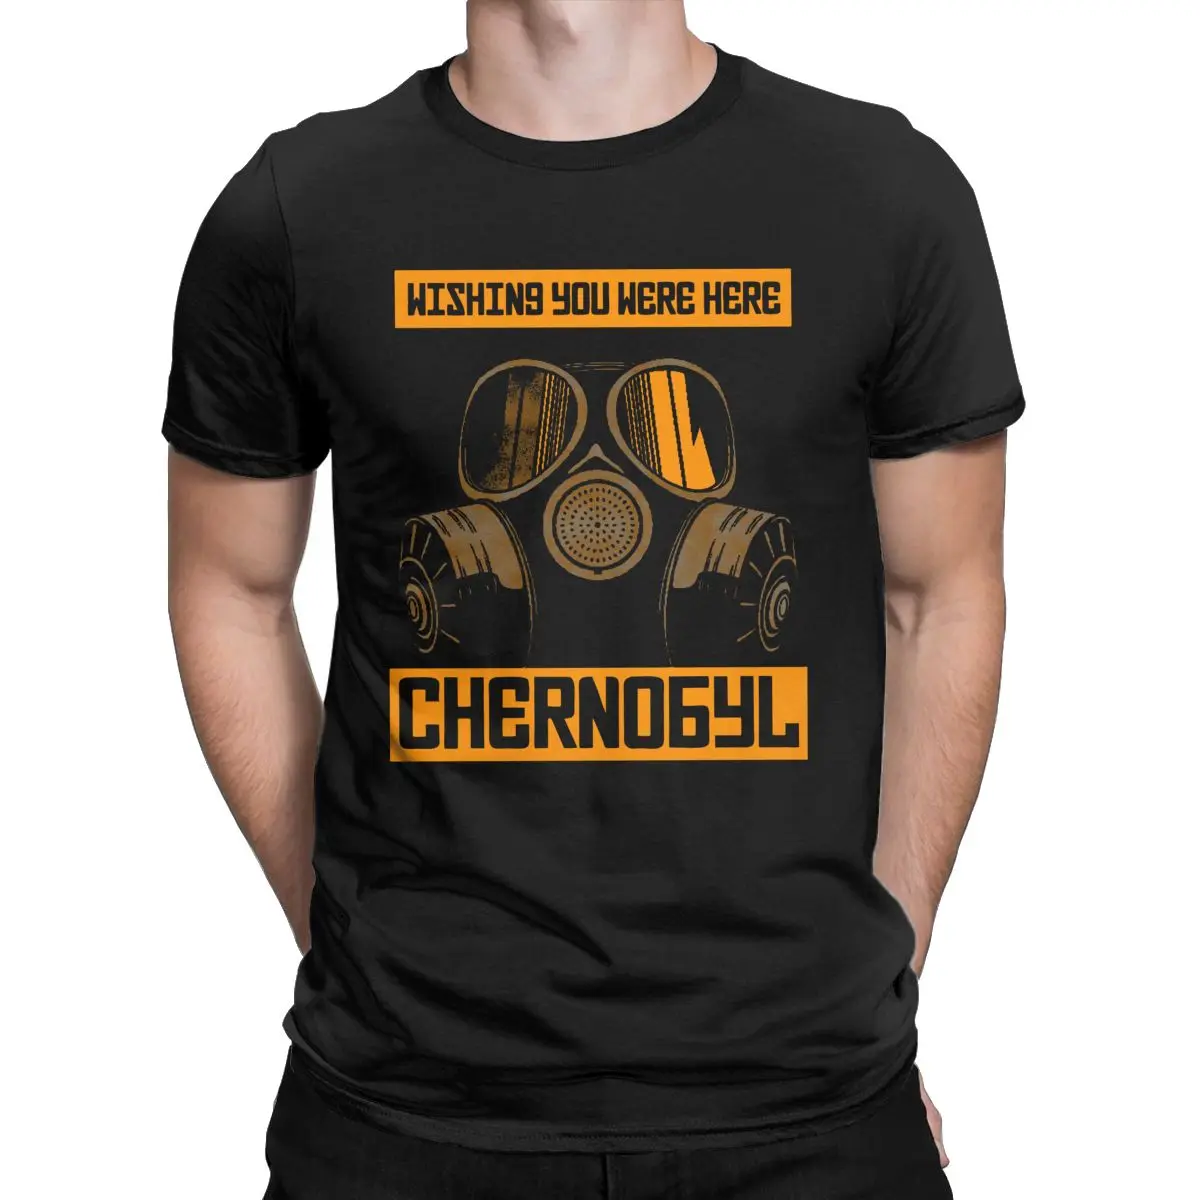 

CHERNOBYL WISHING YOU WERE HERE Men's clothing Novelty Tee Shirt Short Sleeve Crewneck T-Shirt Cotton Graphic Printed Clothing